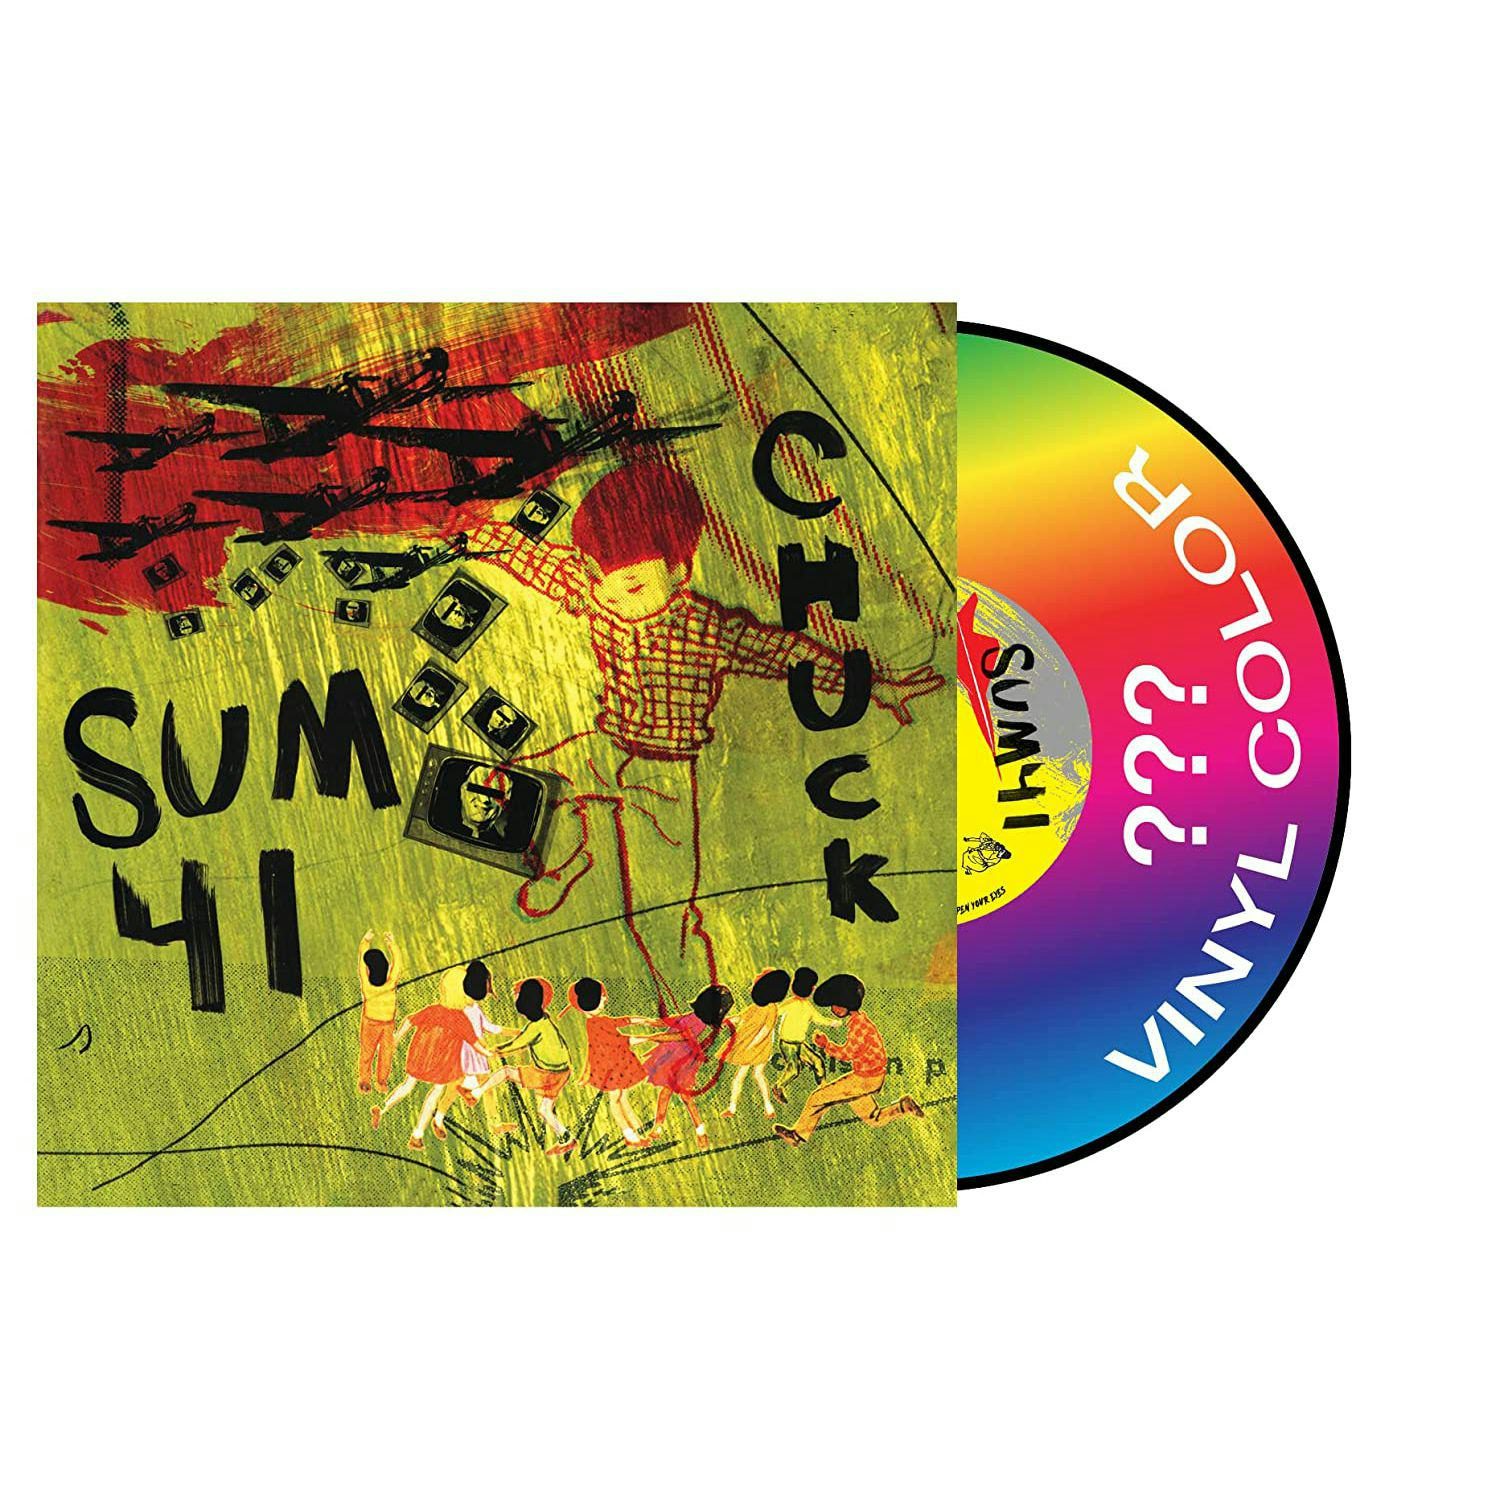 Chuck Vinyl Record - Sum 41